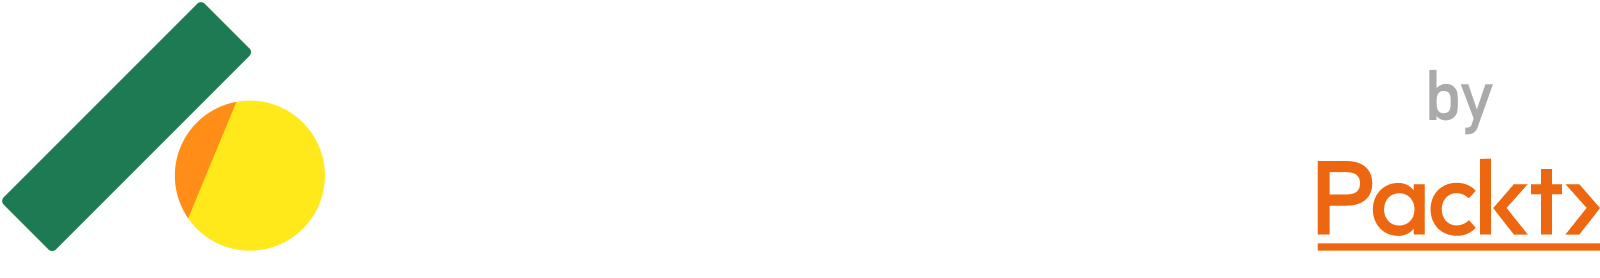 Humble Book Bundle: The Ultimate DevOps Bundle by Packt